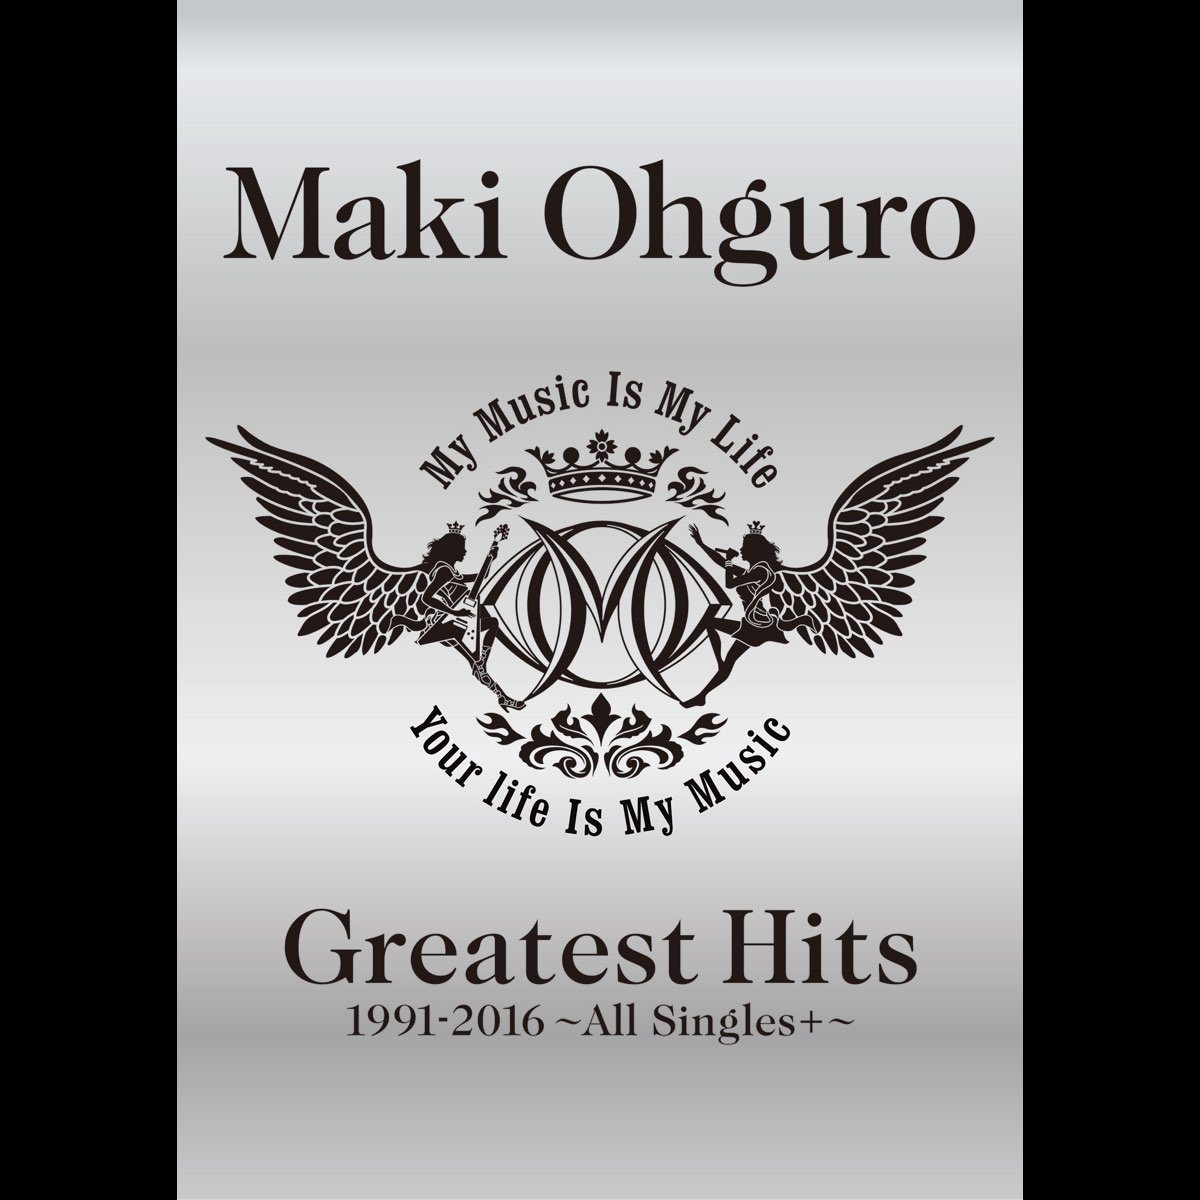 Greatest Hits 1991-2016 ~All Singles + ~ - Album by 大黒摩季